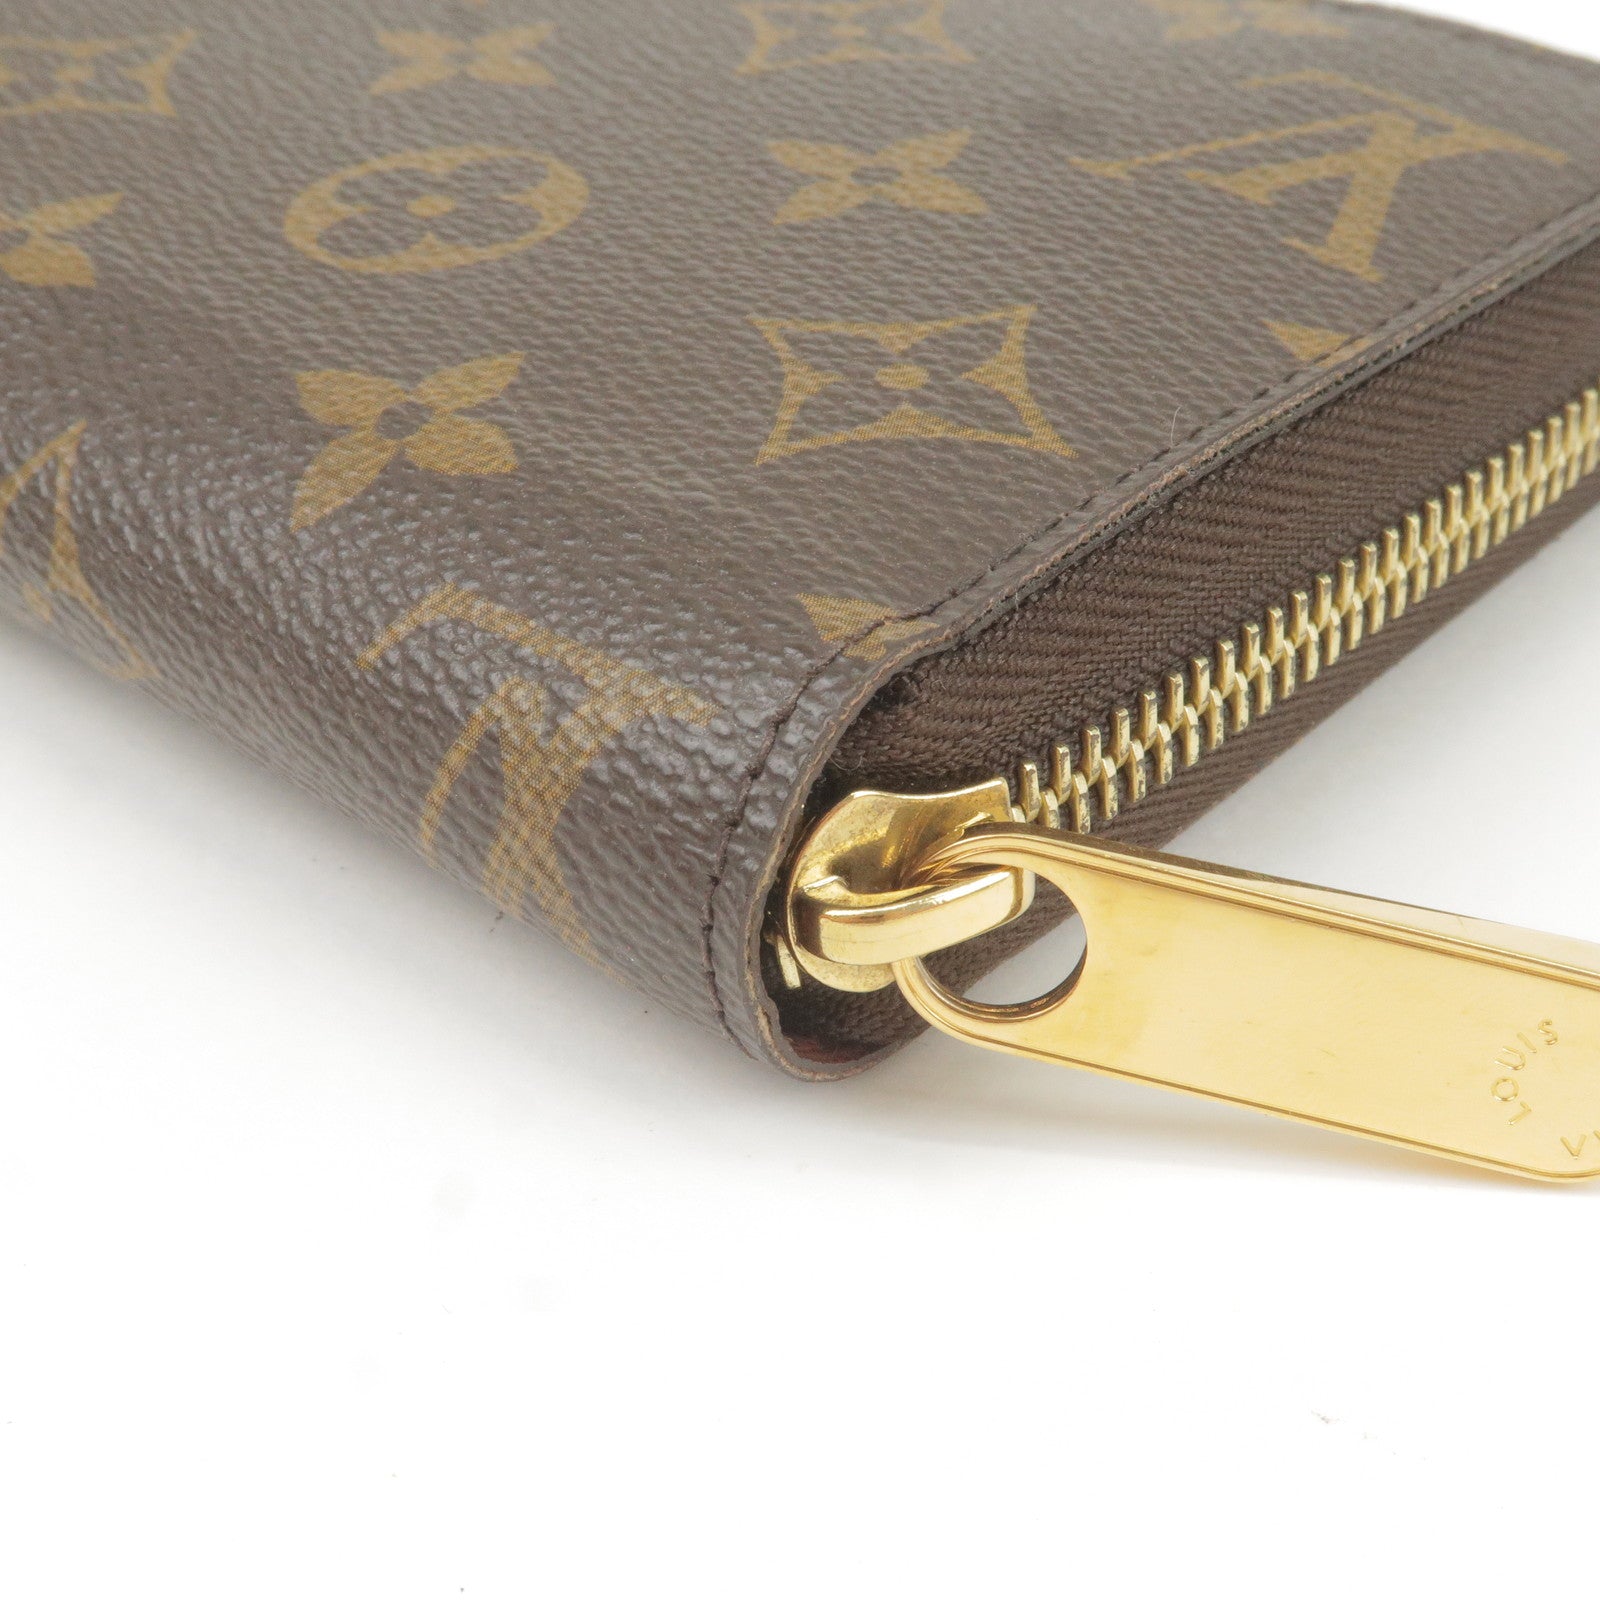 Louis Vuitton - Zippy Wallet - Monogram Canvas - Brown - Women - Luxury